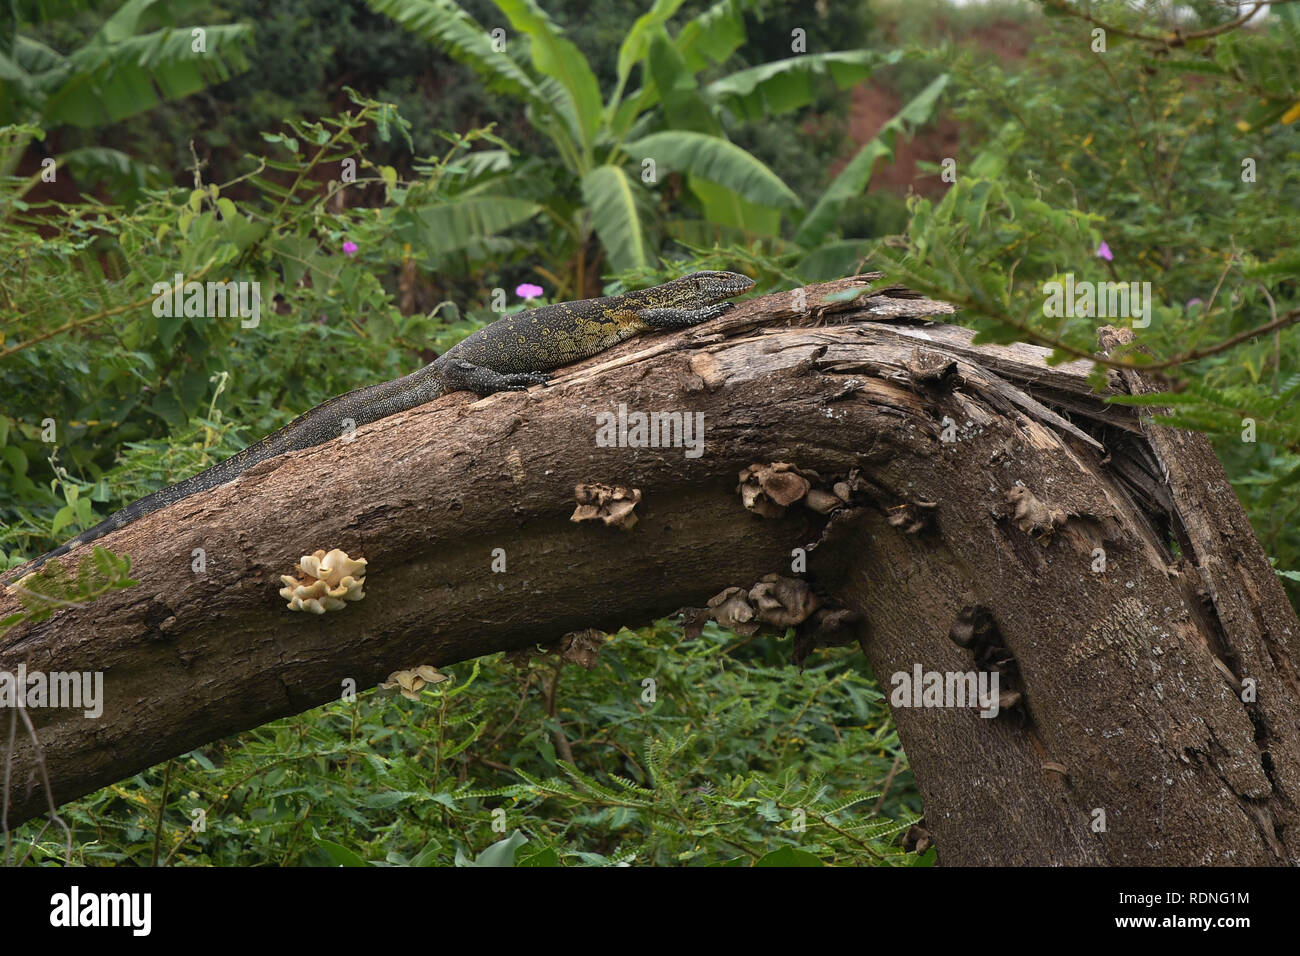 A Nile Monitor Lizard on a fallen tree branch near the source of the nile river in Jinja, Uganda Stock Photo